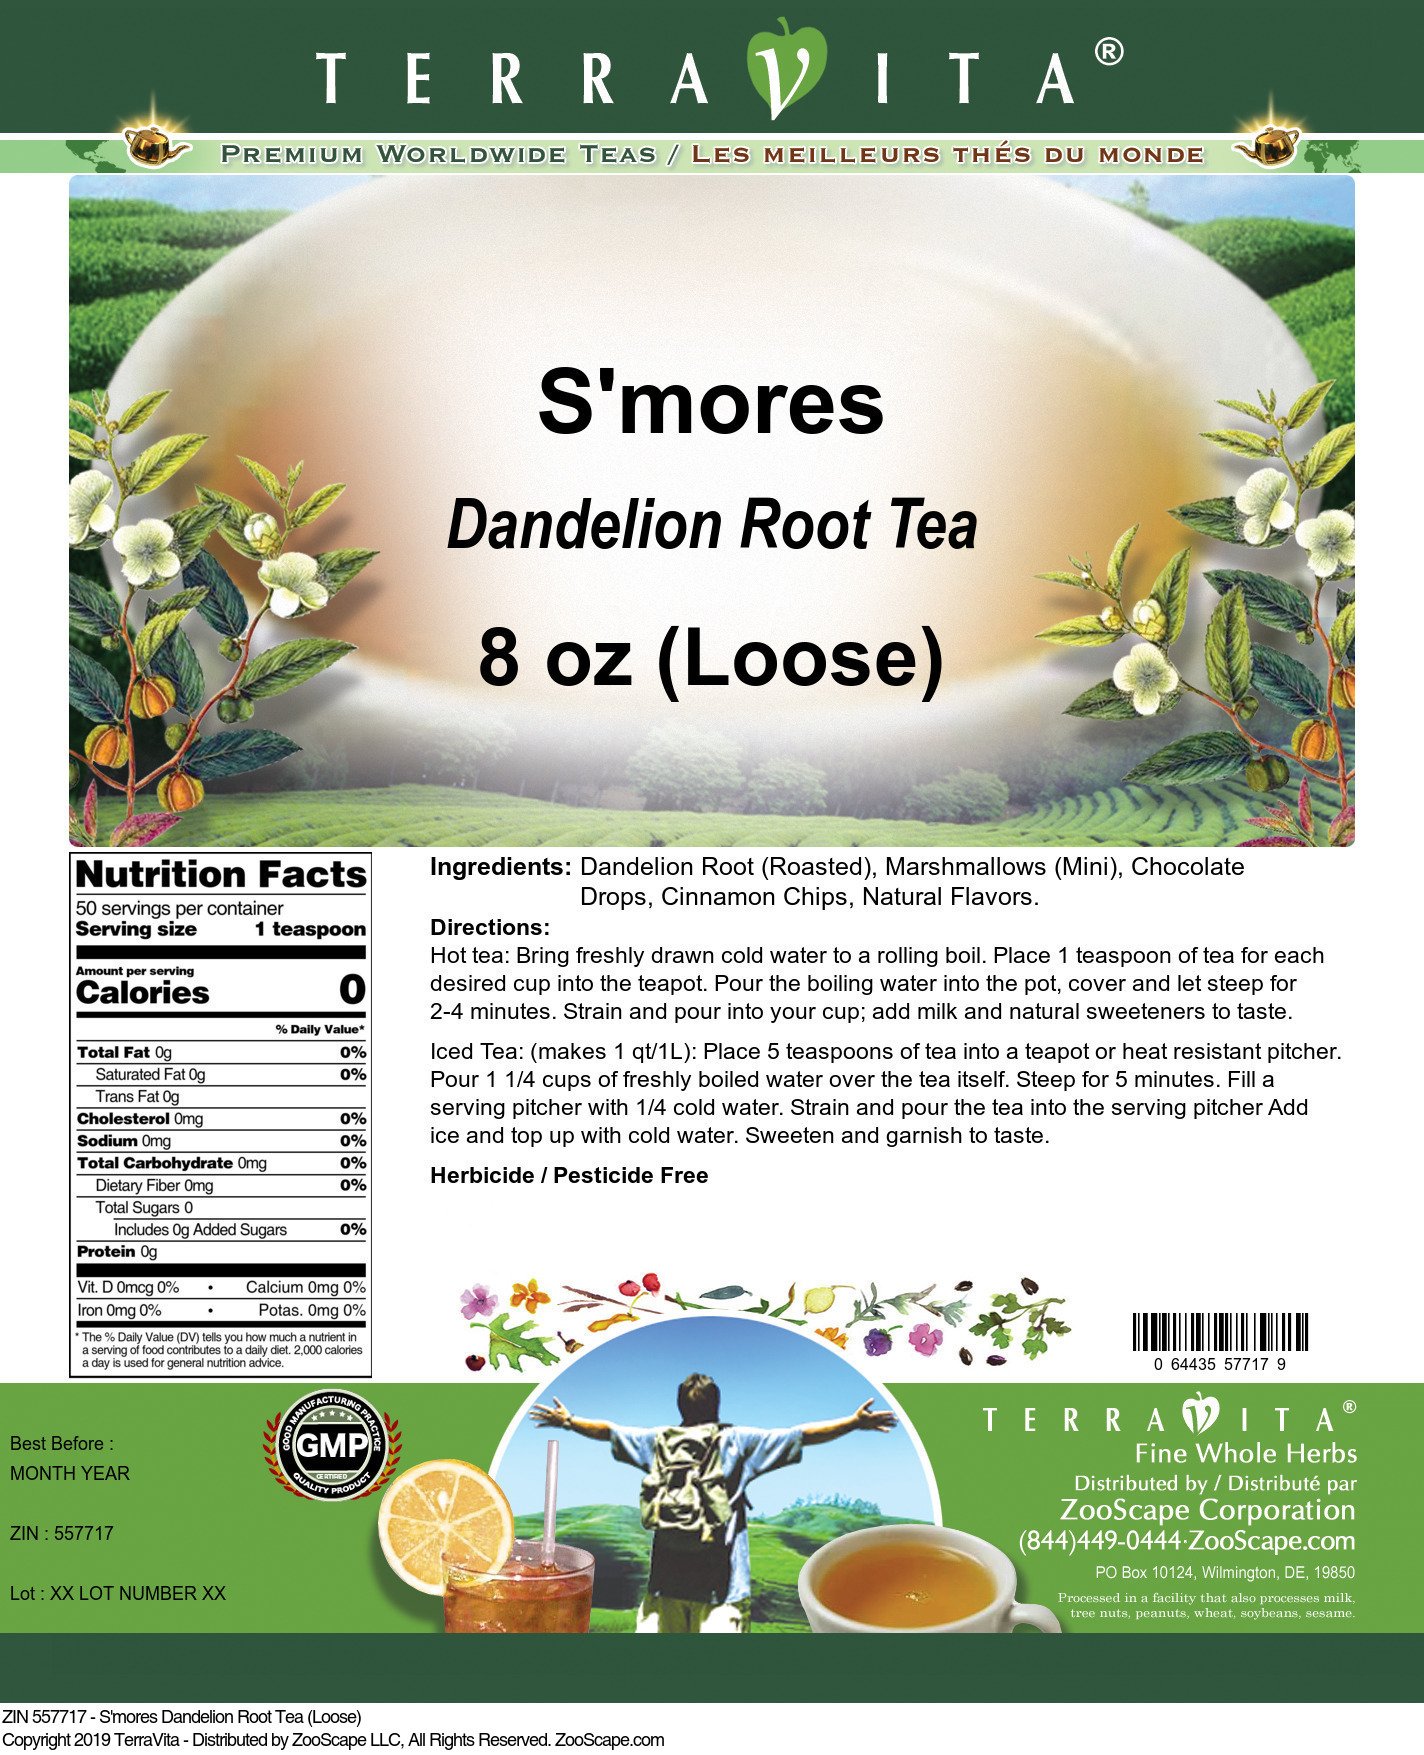 S'mores Dandelion Root Tea (Loose) - Label